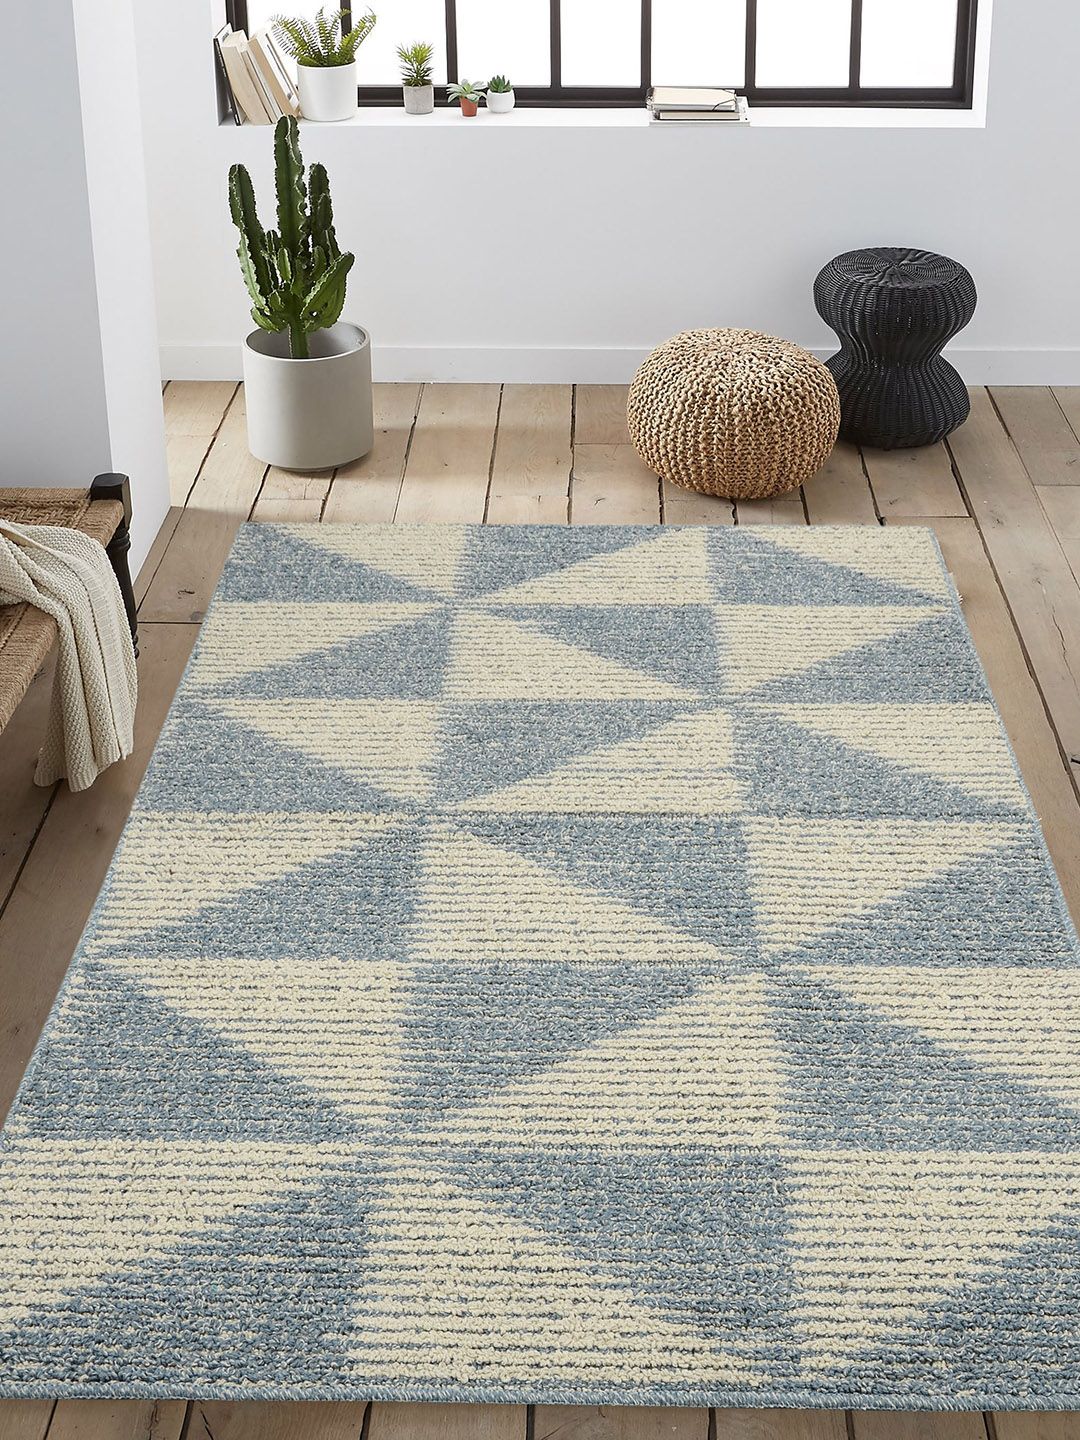 Saral Home Blue & Beige Geometric Modern Carpet Price in India